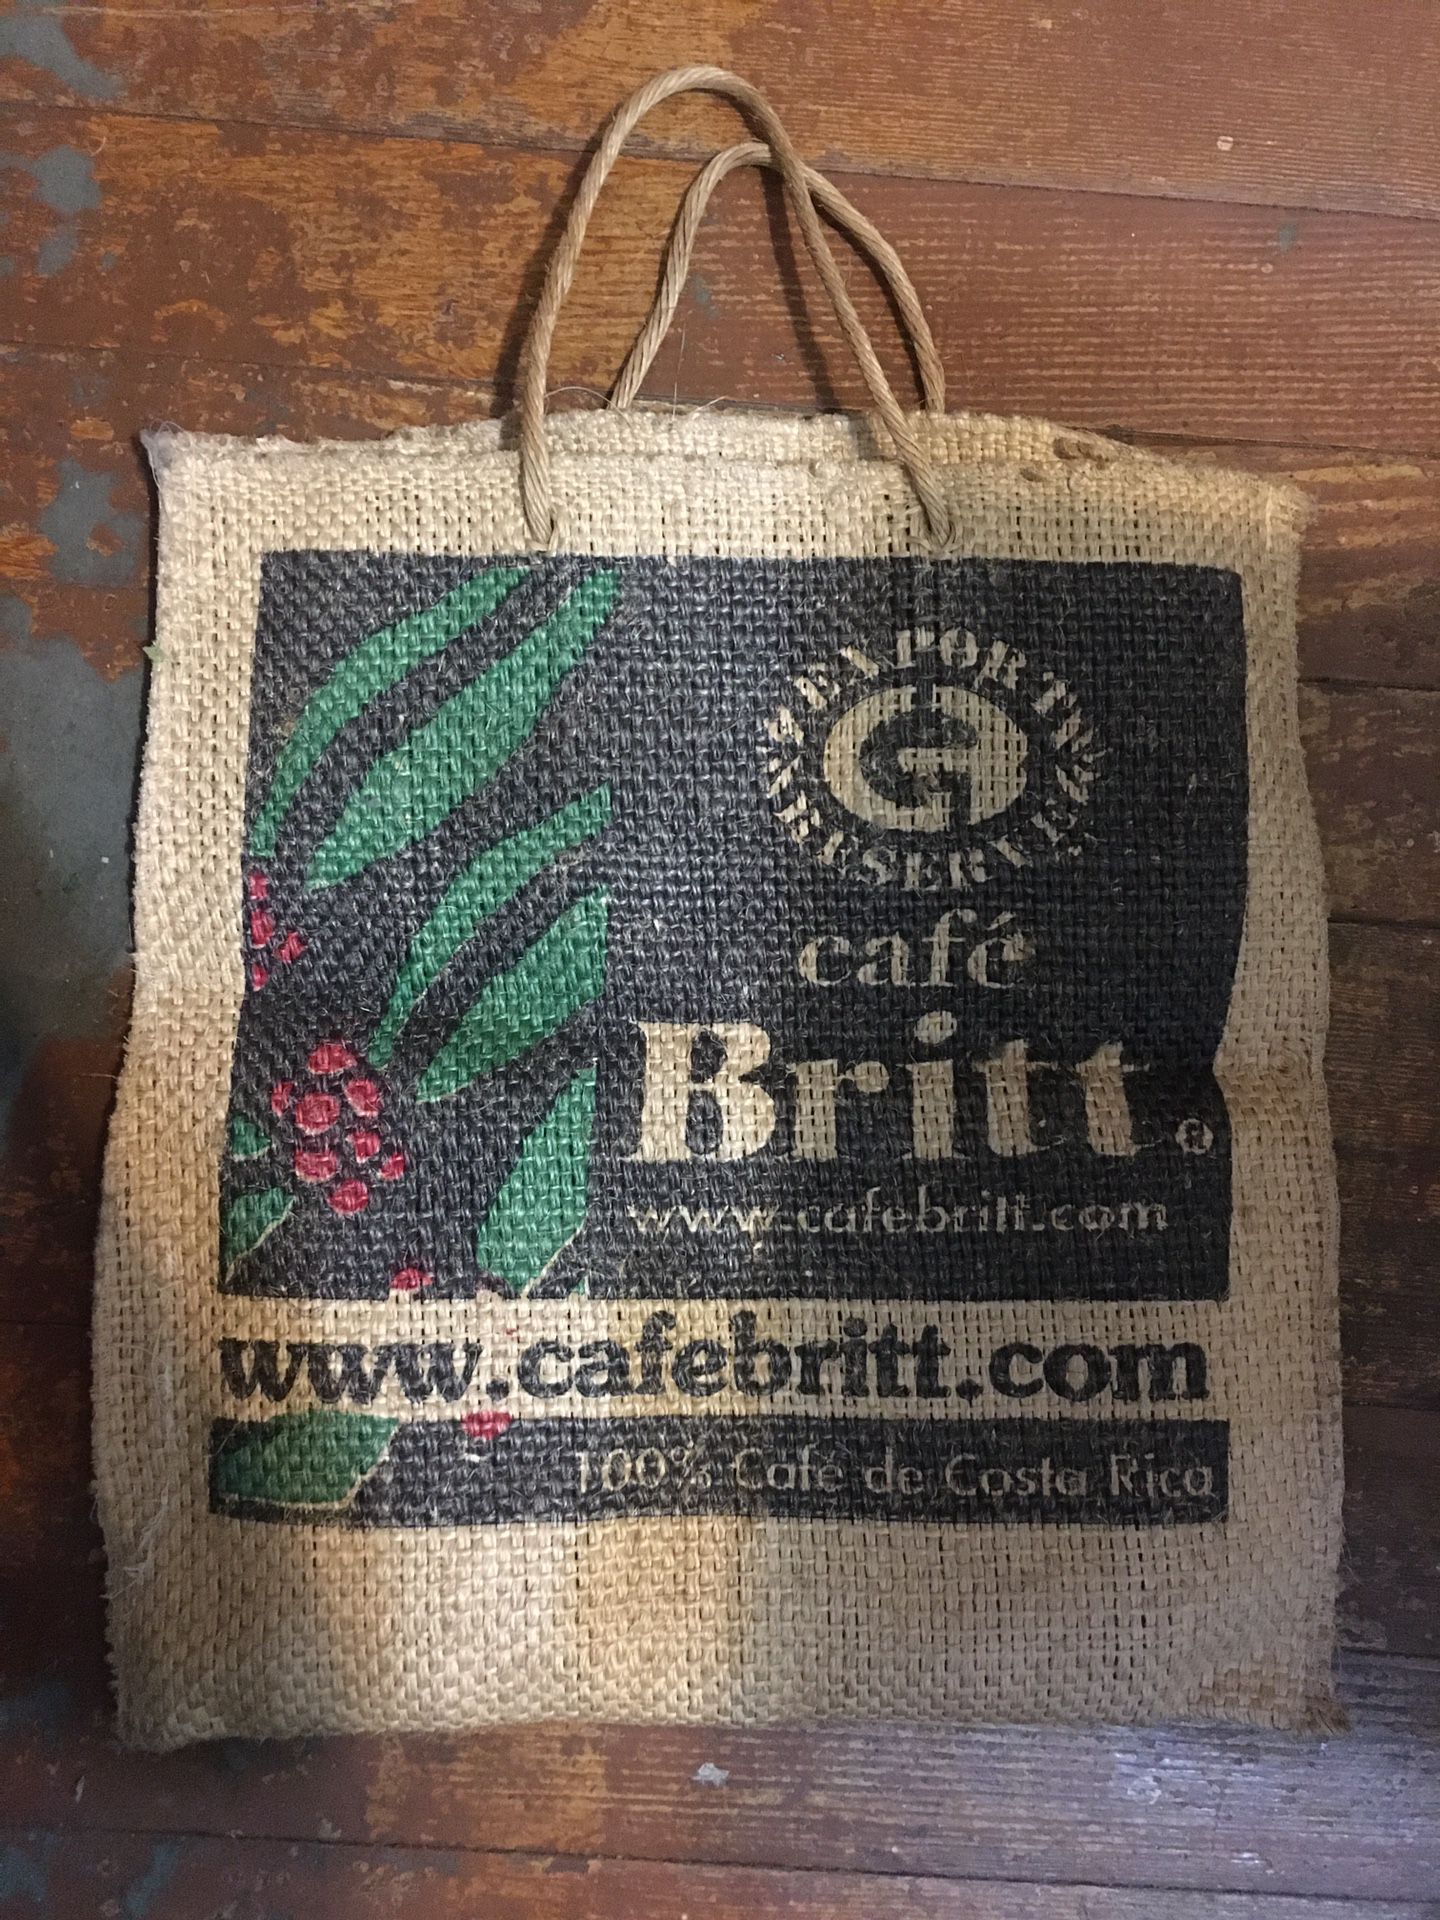 Cafe Britt Thick Burlap Tote Bag Costa Rica Coffee Bean Sack 16” X 17”